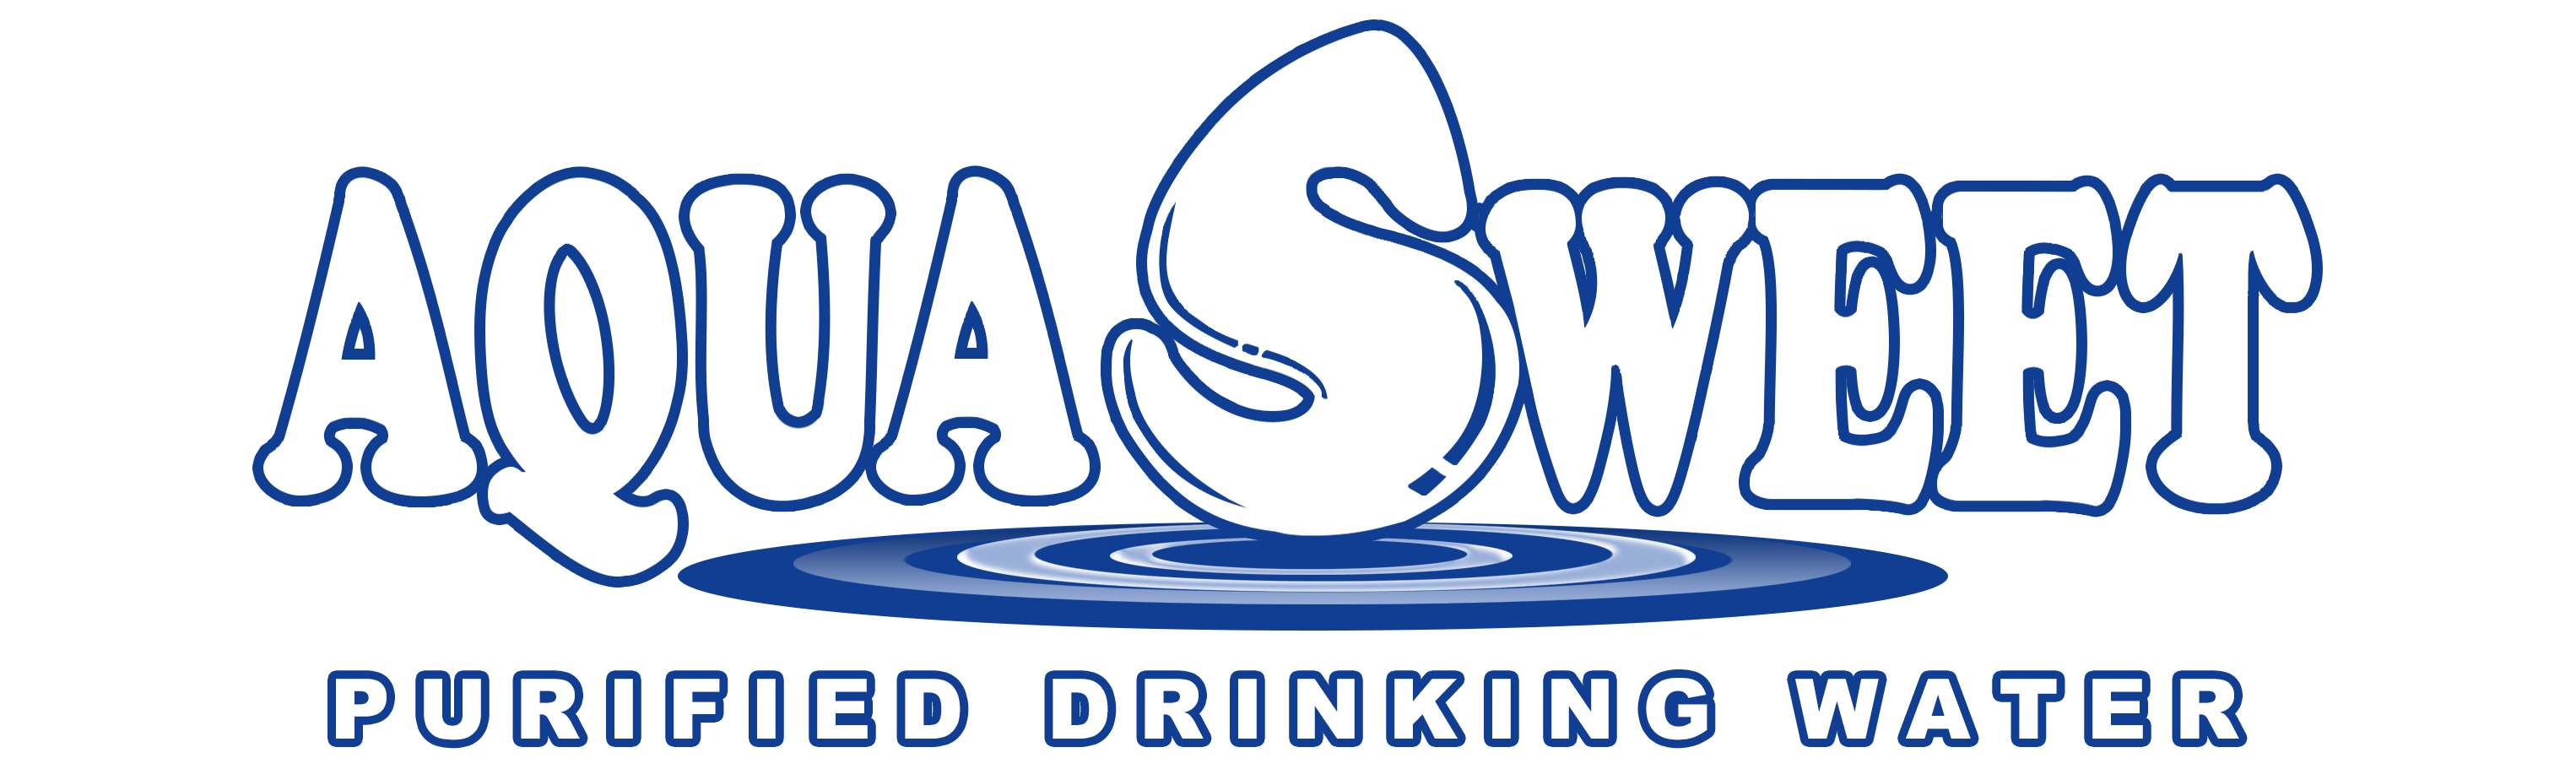 Aquasweet Logo